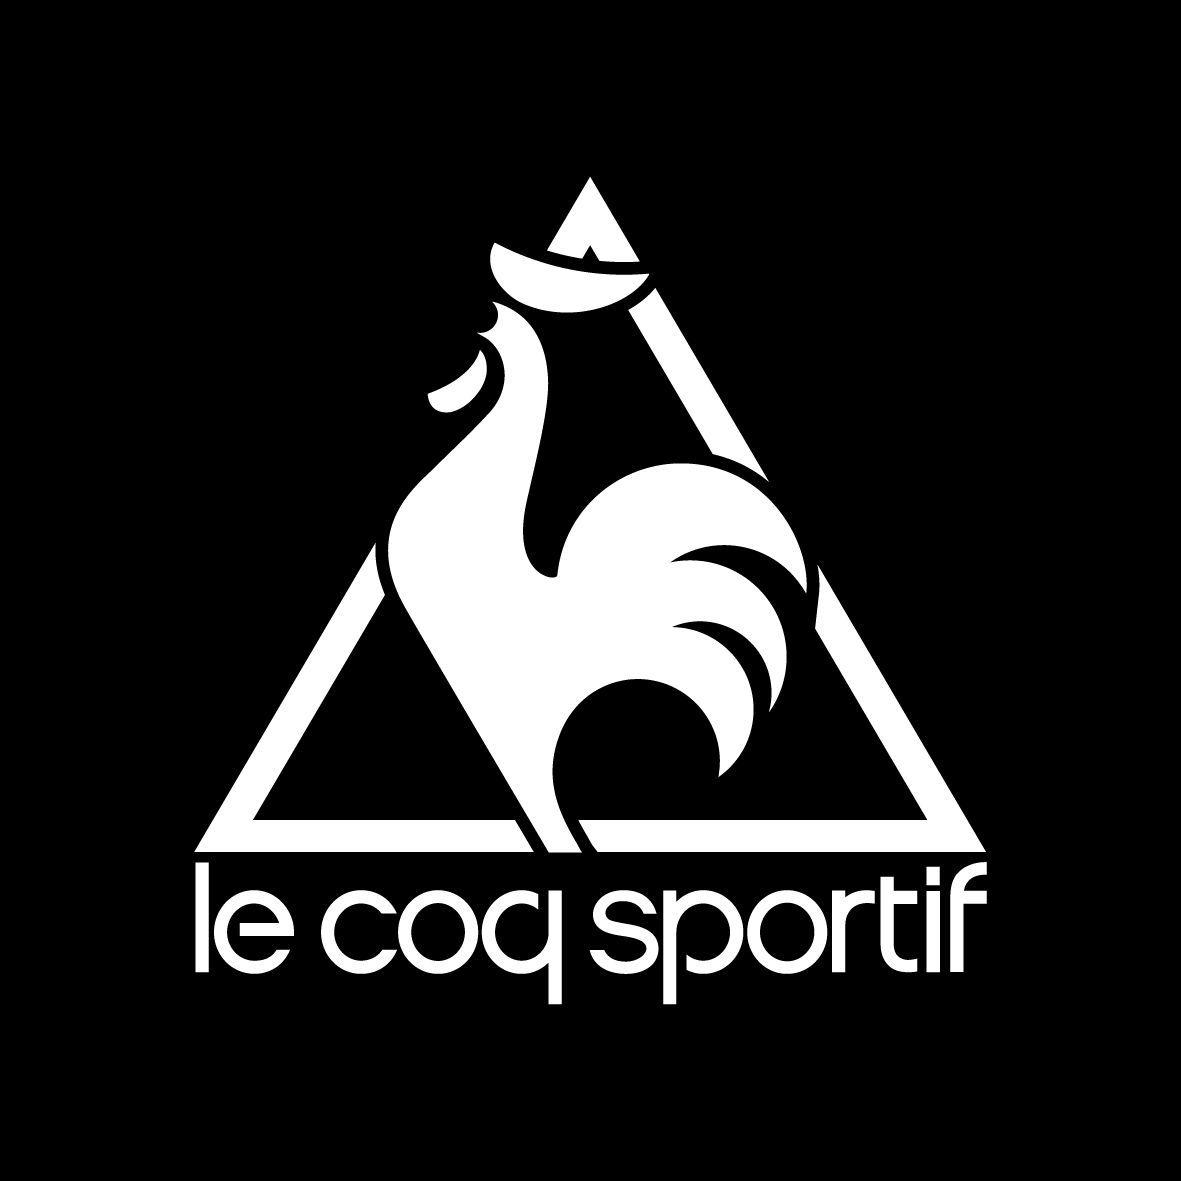 Le Coq Sportif Logo - Le Coq Sportif | Logos | Logo design, Logos, Bird logos